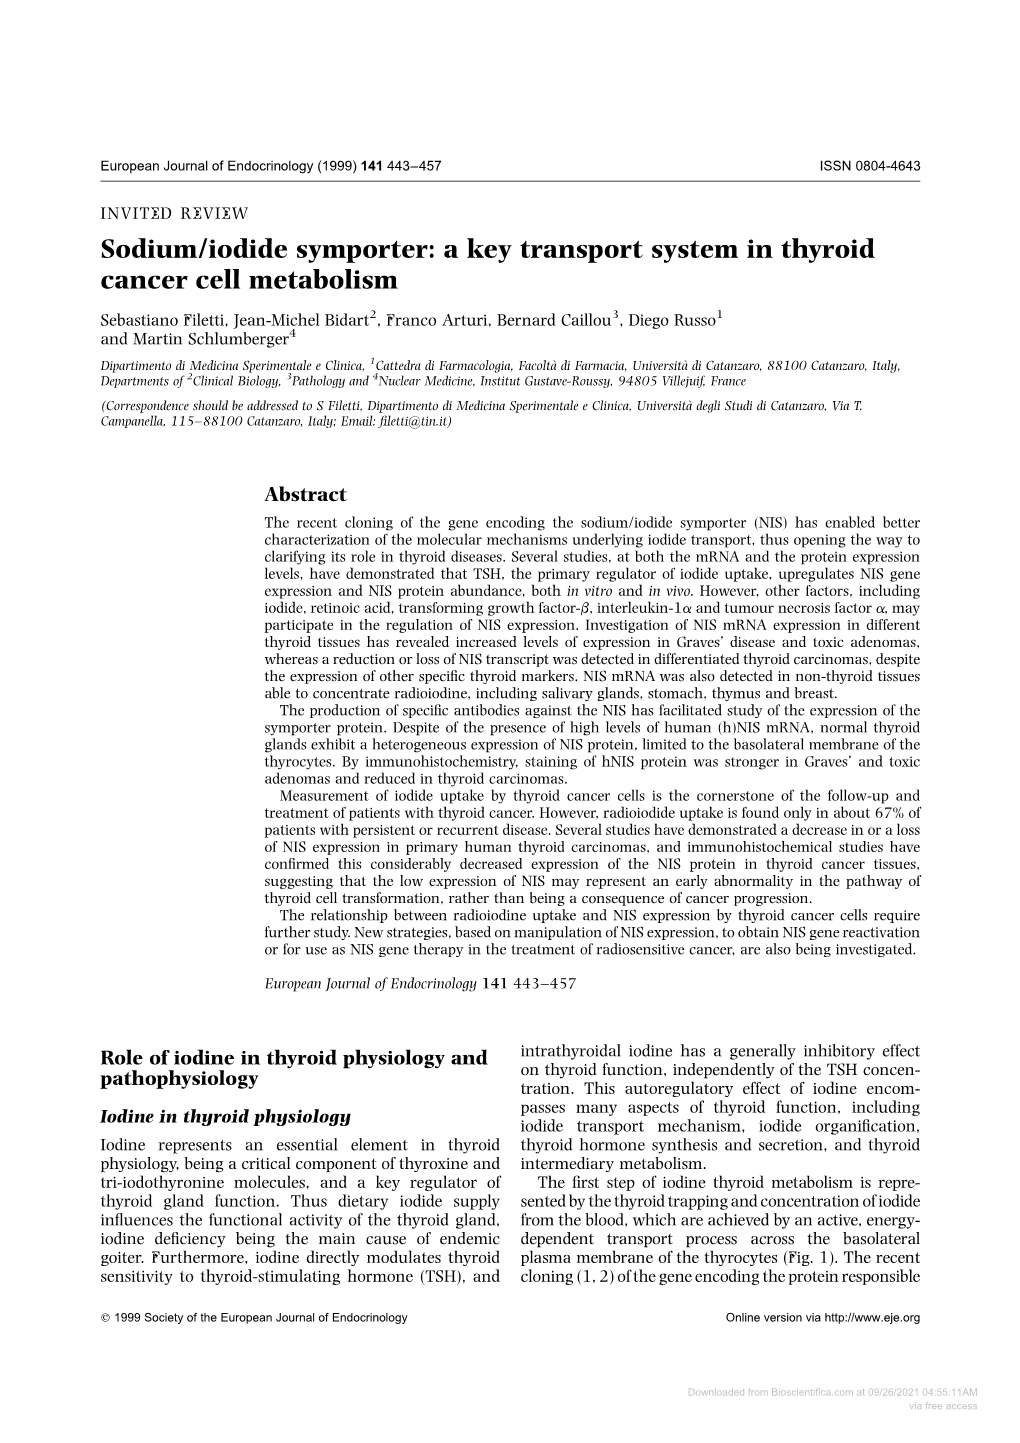 Sodium/Iodide Symporter: a Key Transport System in Thyroid Cancer Cell Metabolism